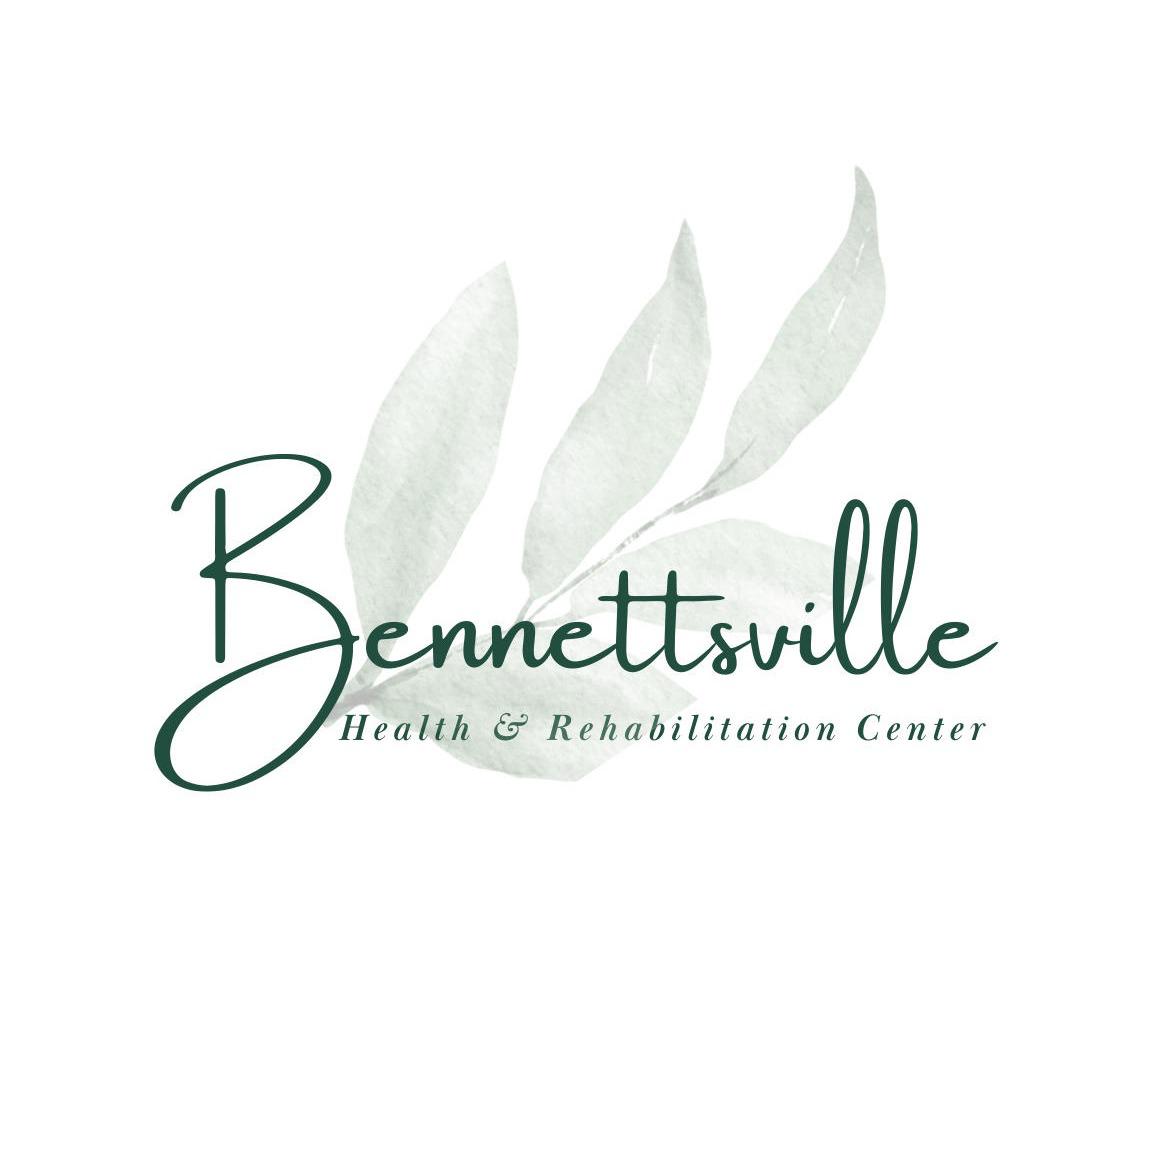 Bennettsville Health & Rehabilitation Center - Bennettsville, SC 29512 - (843)479-6251 | ShowMeLocal.com